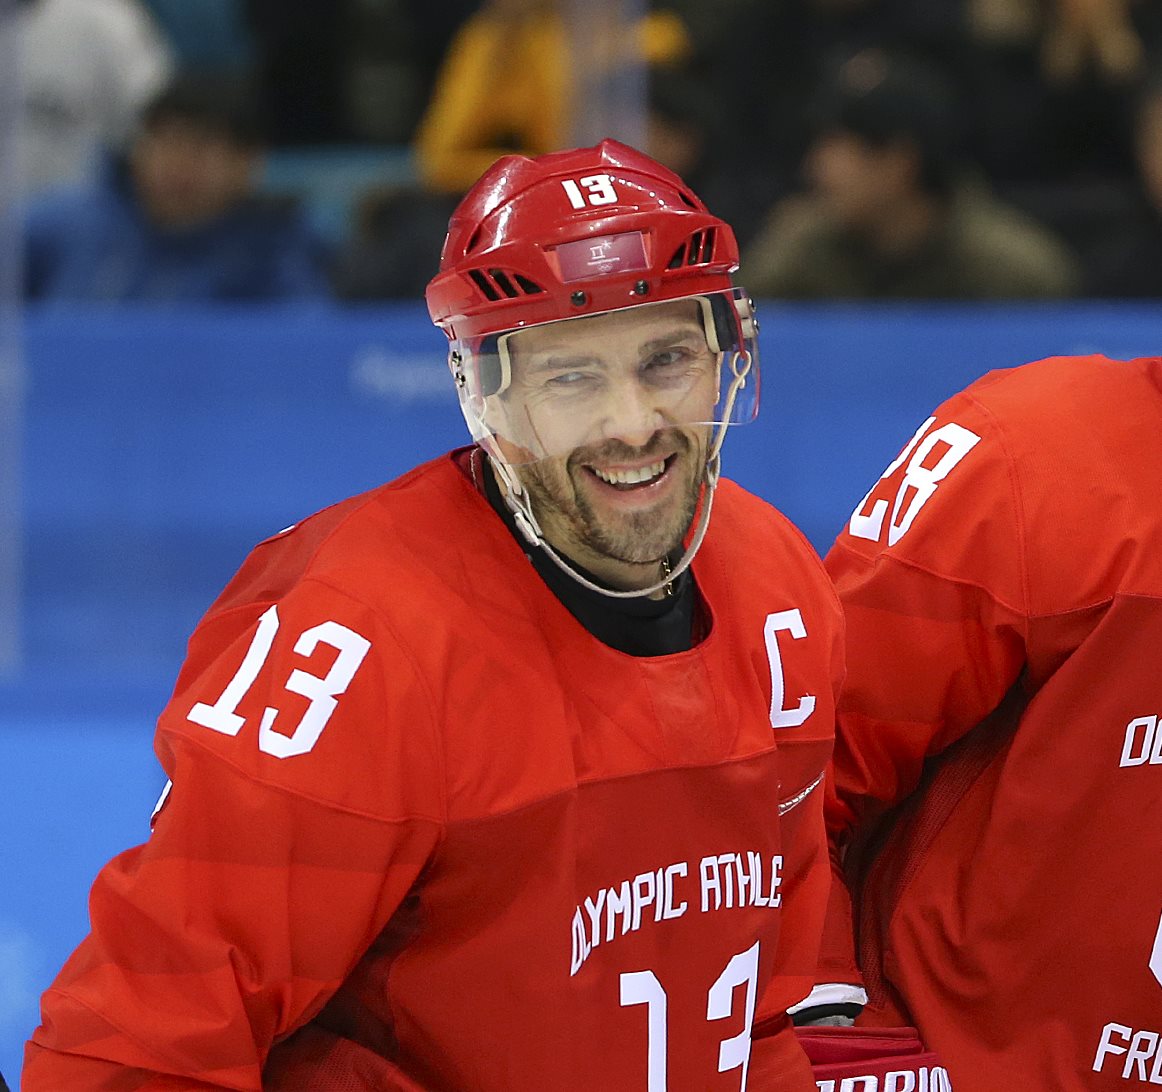 Pavel Datsyuk Hockey Stats and Profile at